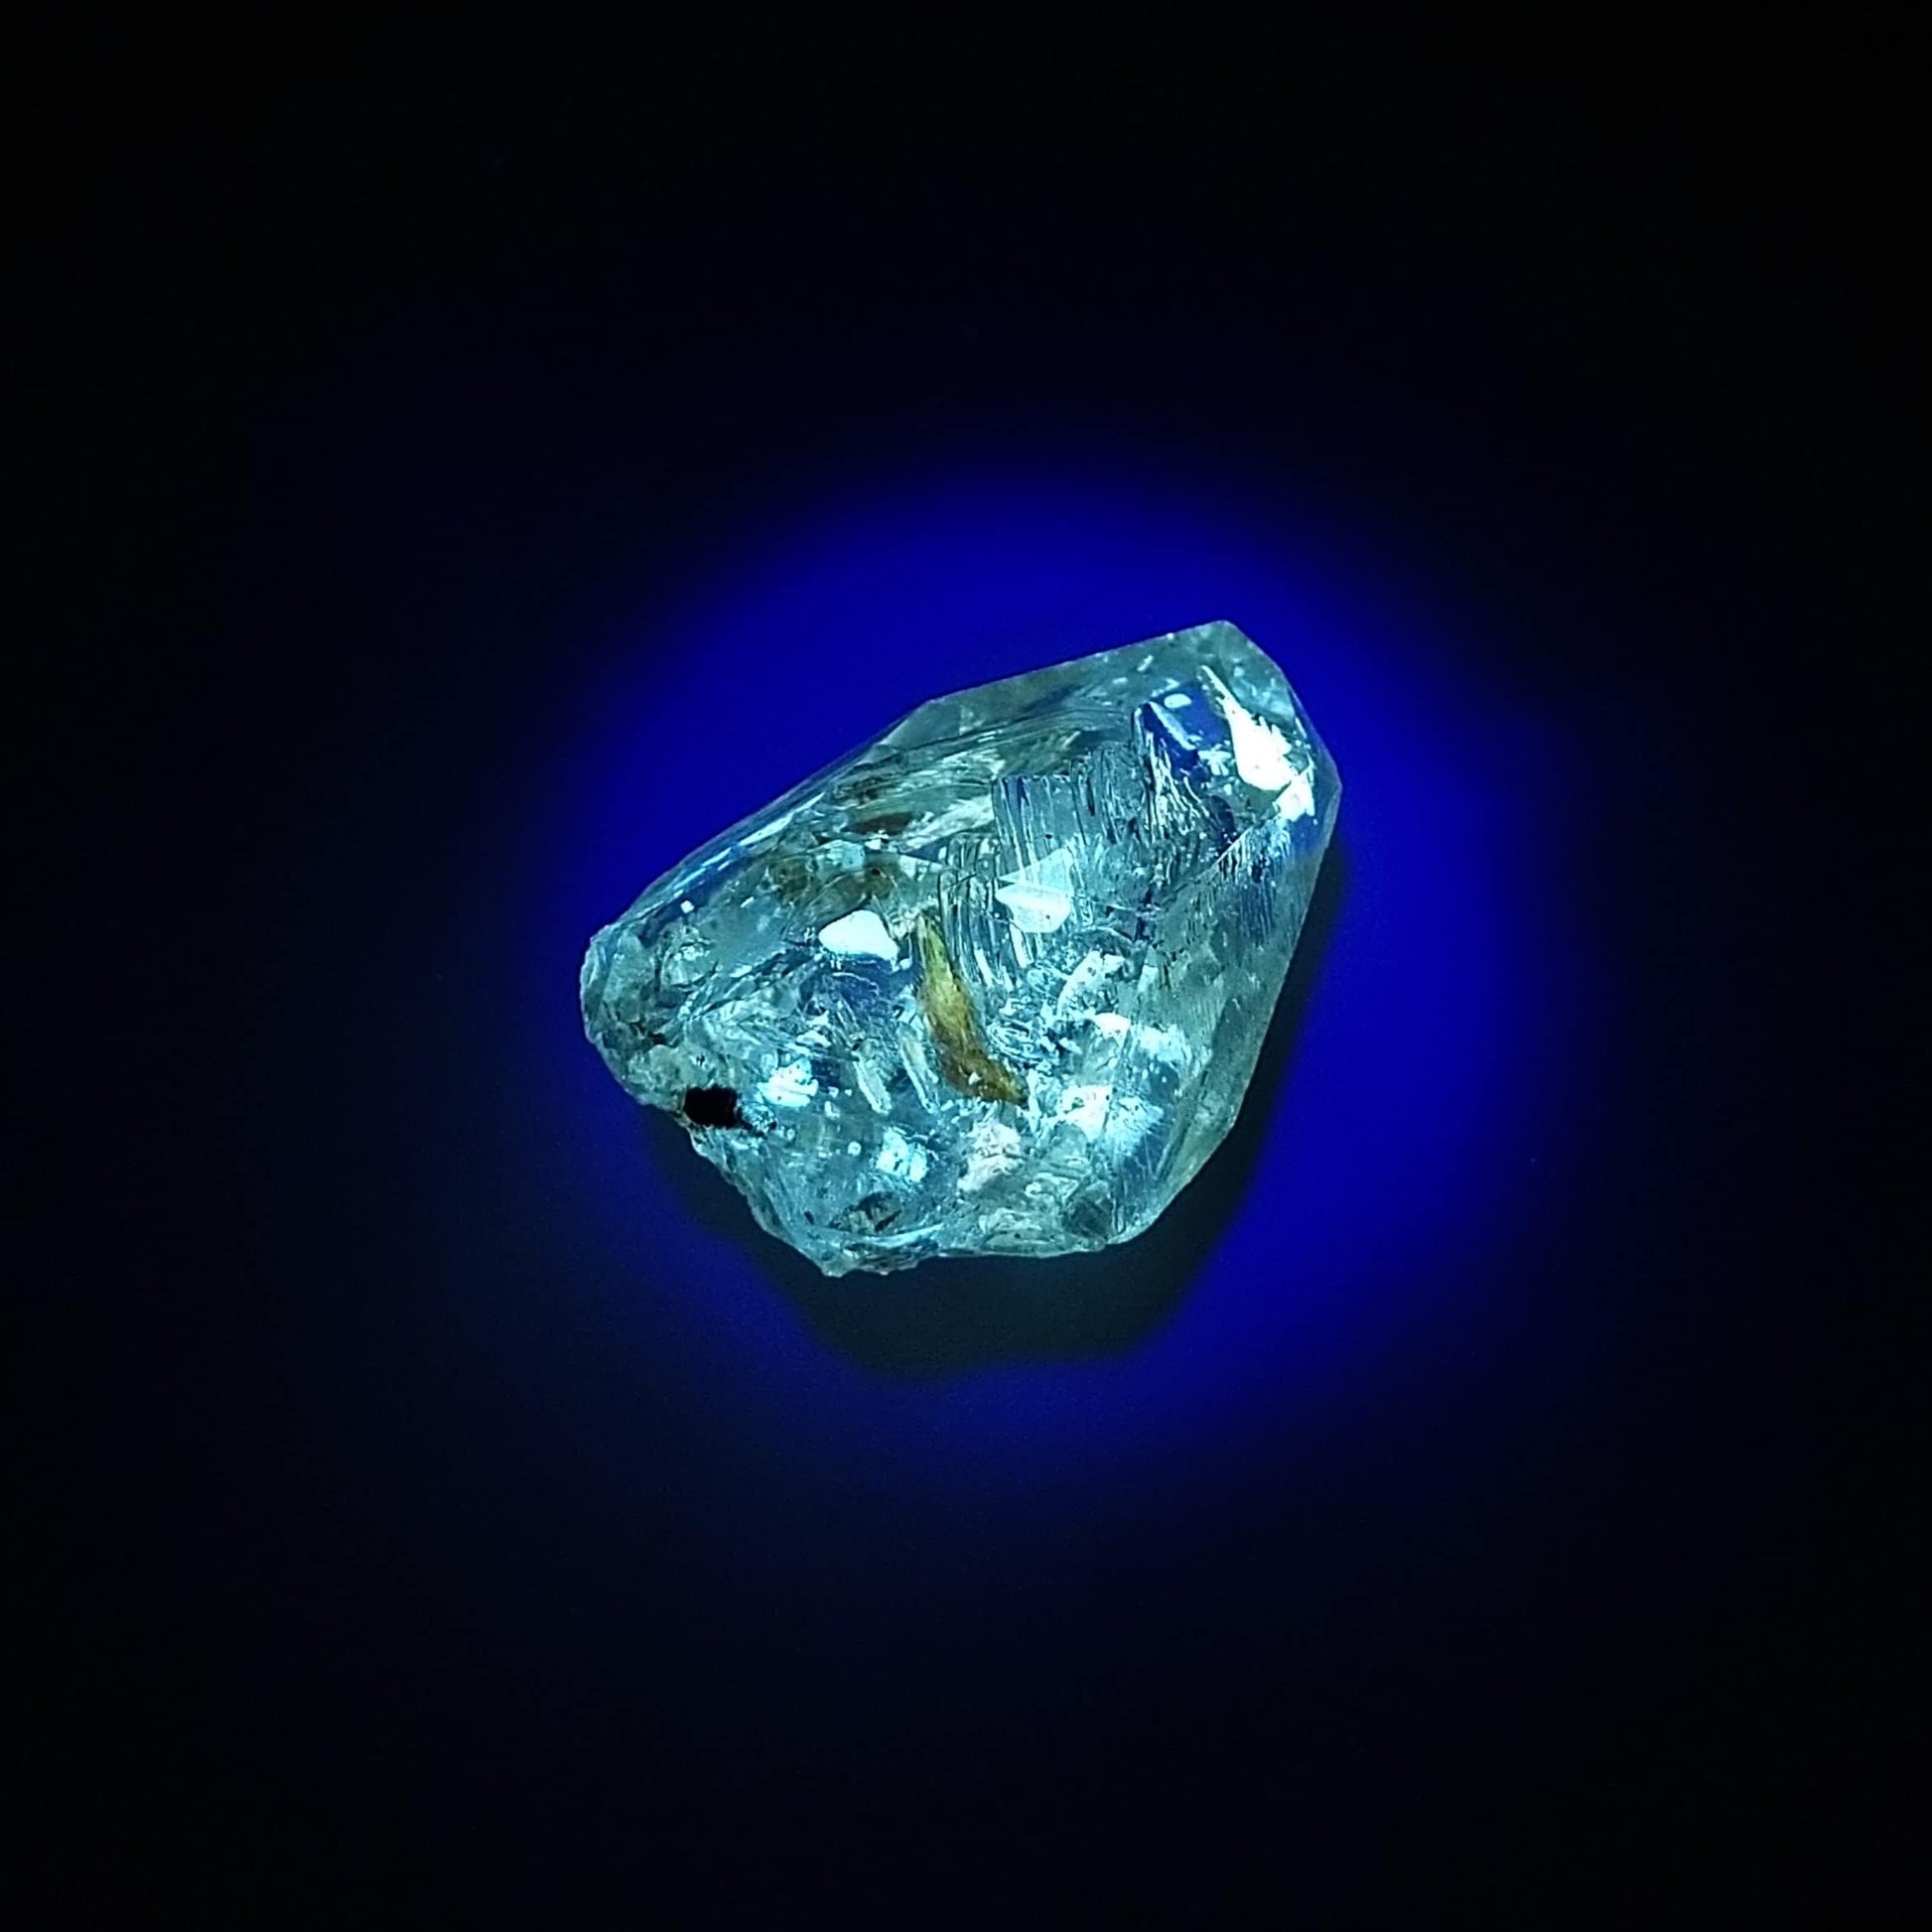 ARSAA GEMS AND MINERALSAesthetic fine quality beautiful UV reactive petroleum quartz crystal from Balochistan Pakistan, weight 9.3 grams - Premium  from ARSAA GEMS AND MINERALS - Just $150.00! Shop now at ARSAA GEMS AND MINERALS